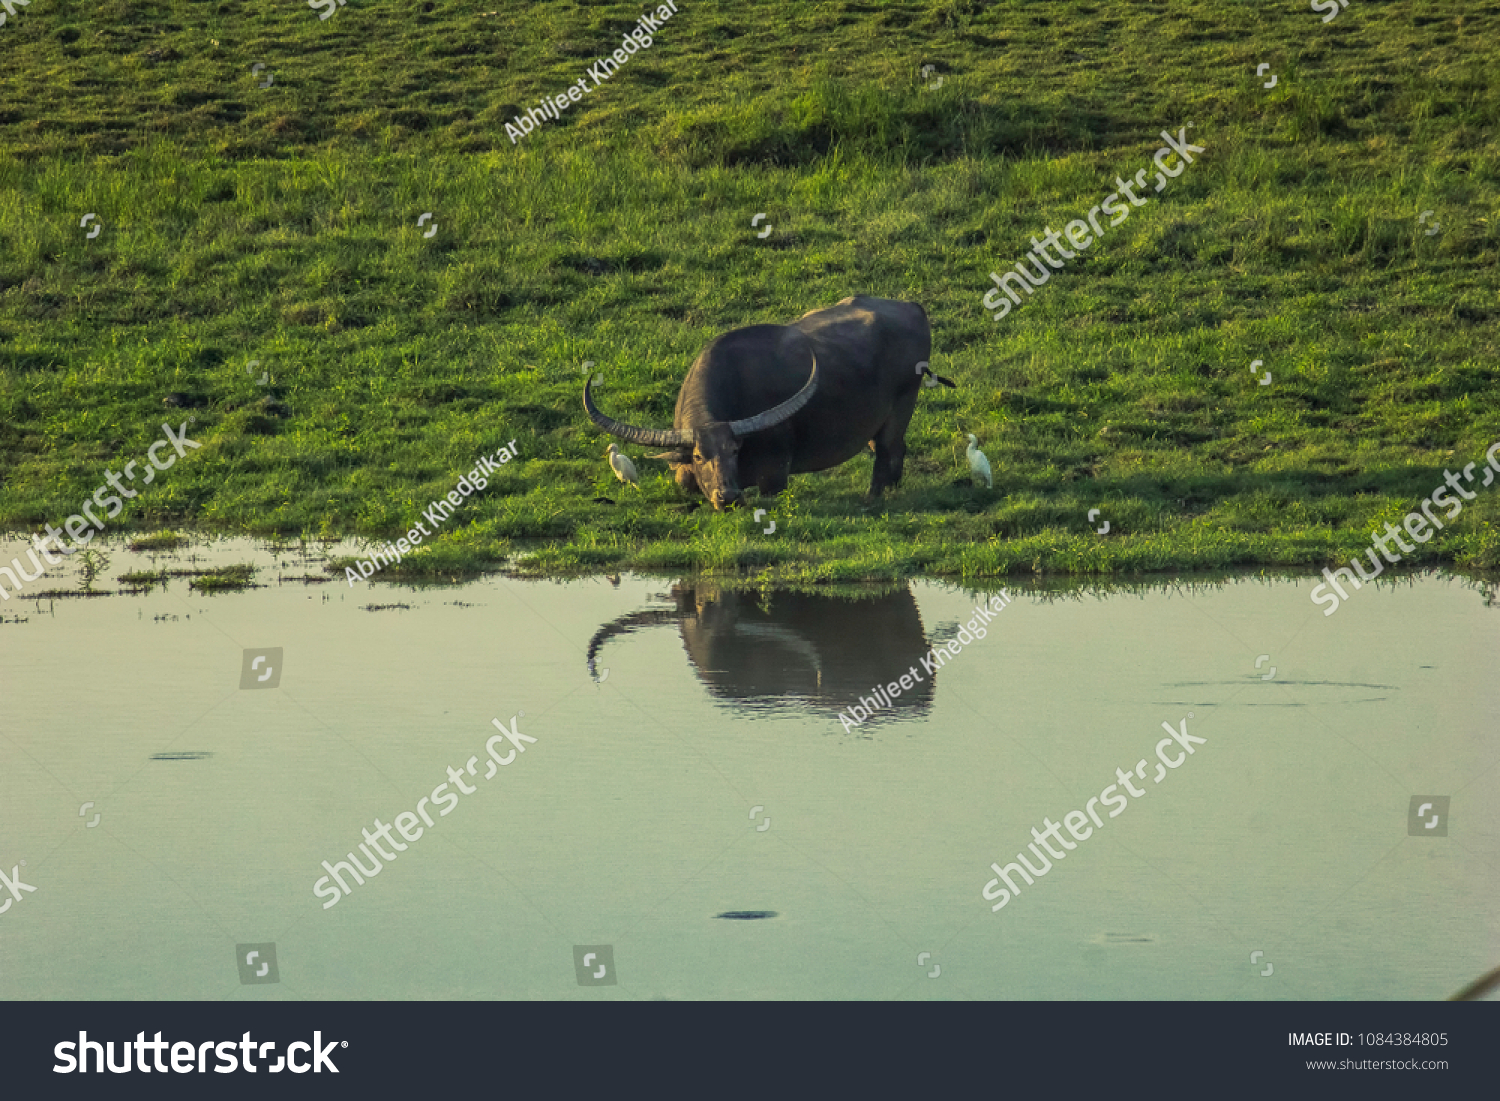 File:Murrah buffalo.JPG - Wikipedia